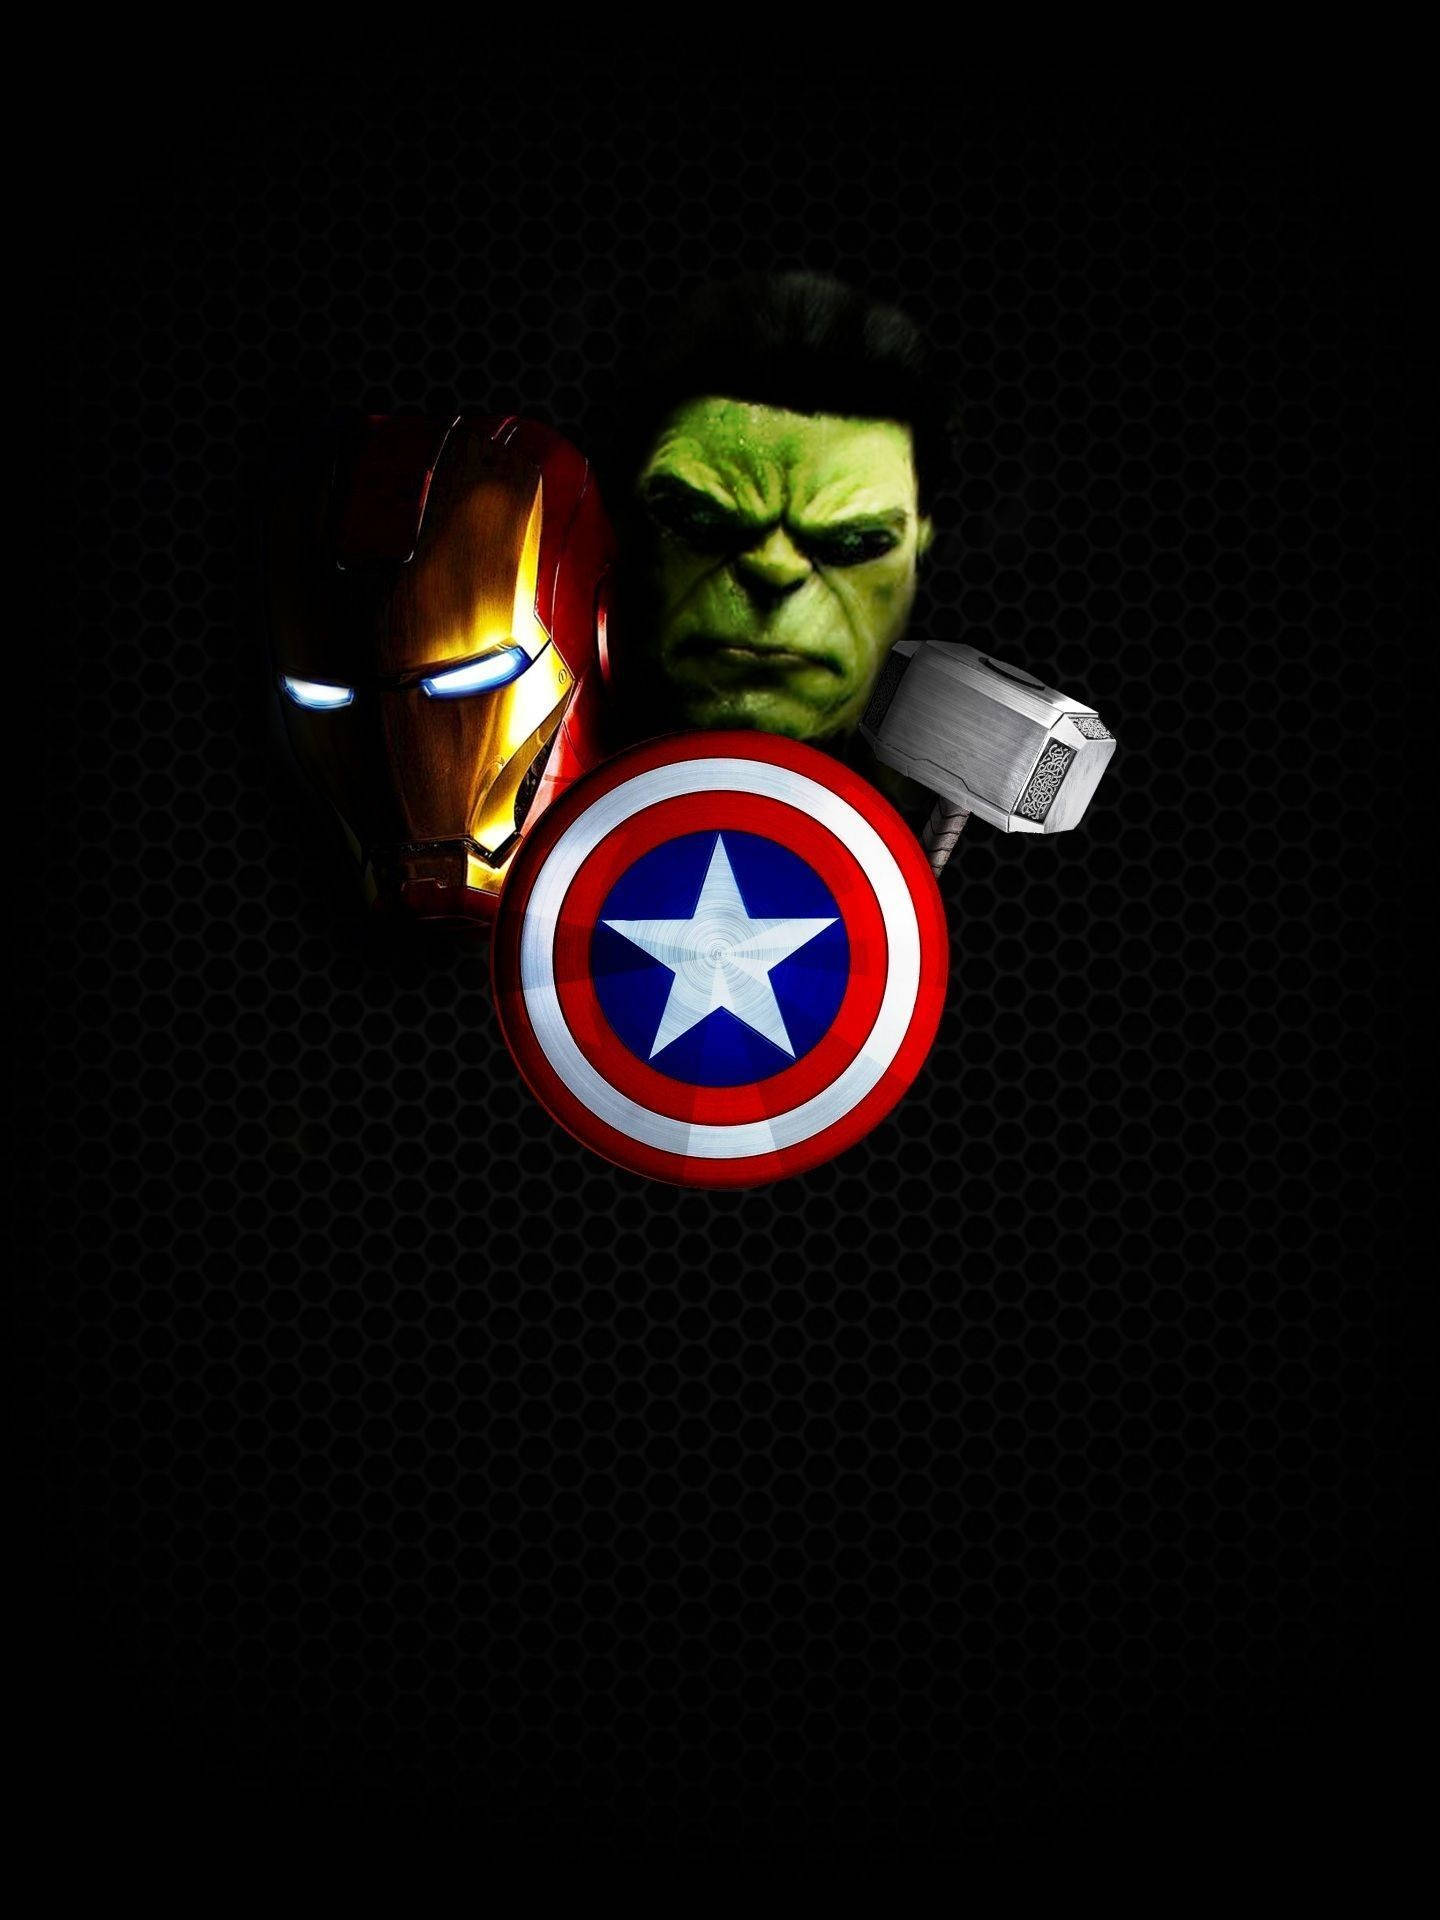 Avengers Power Costume Tumblr Iphone